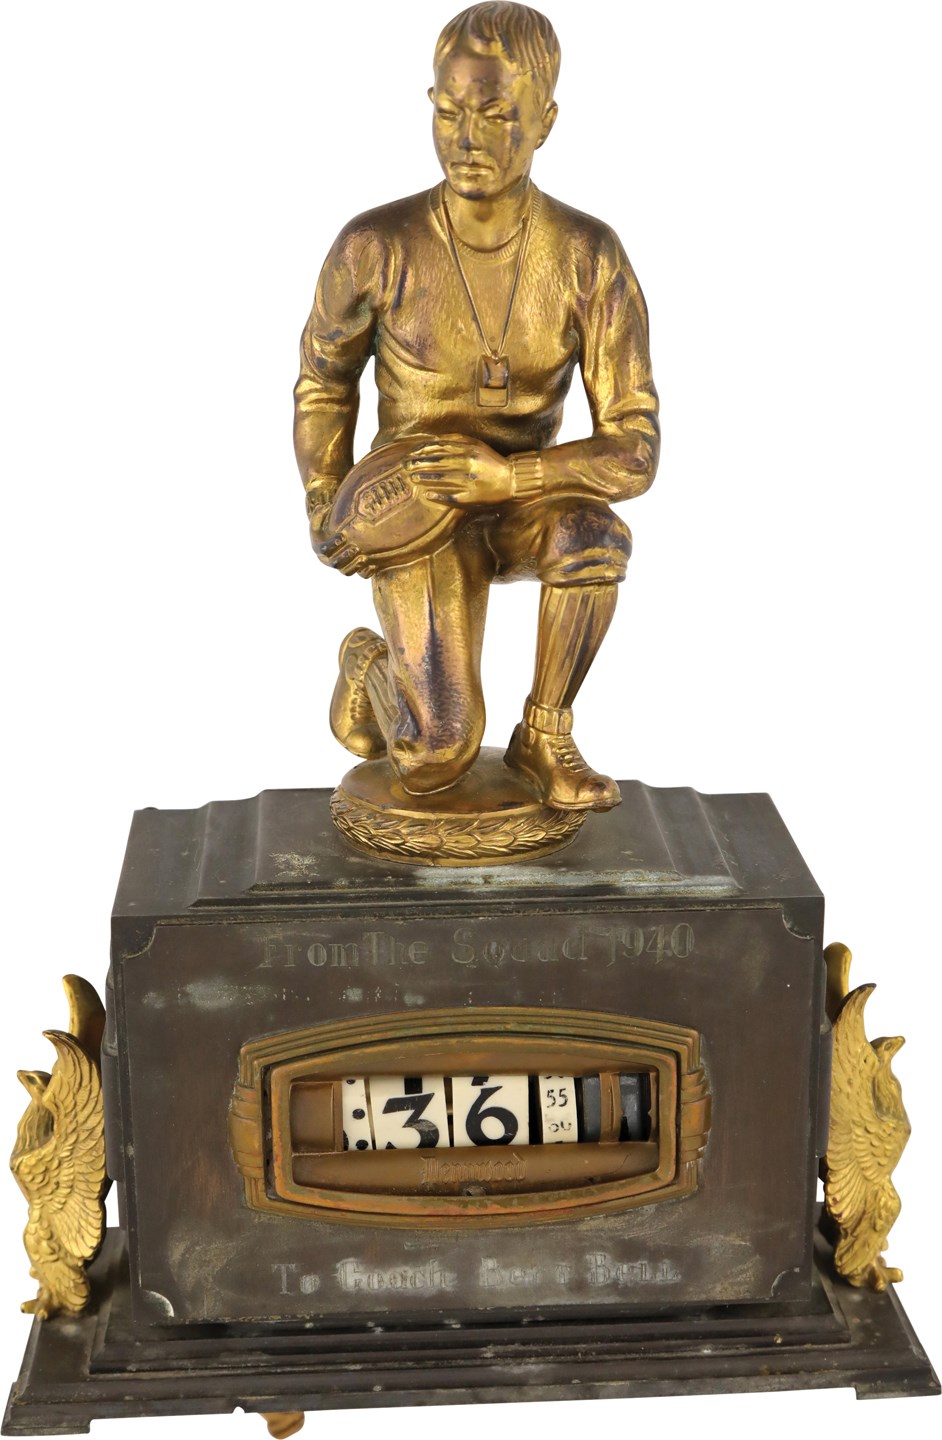 Football - 1940 Presentational Clock Award Presented to Bert Bell